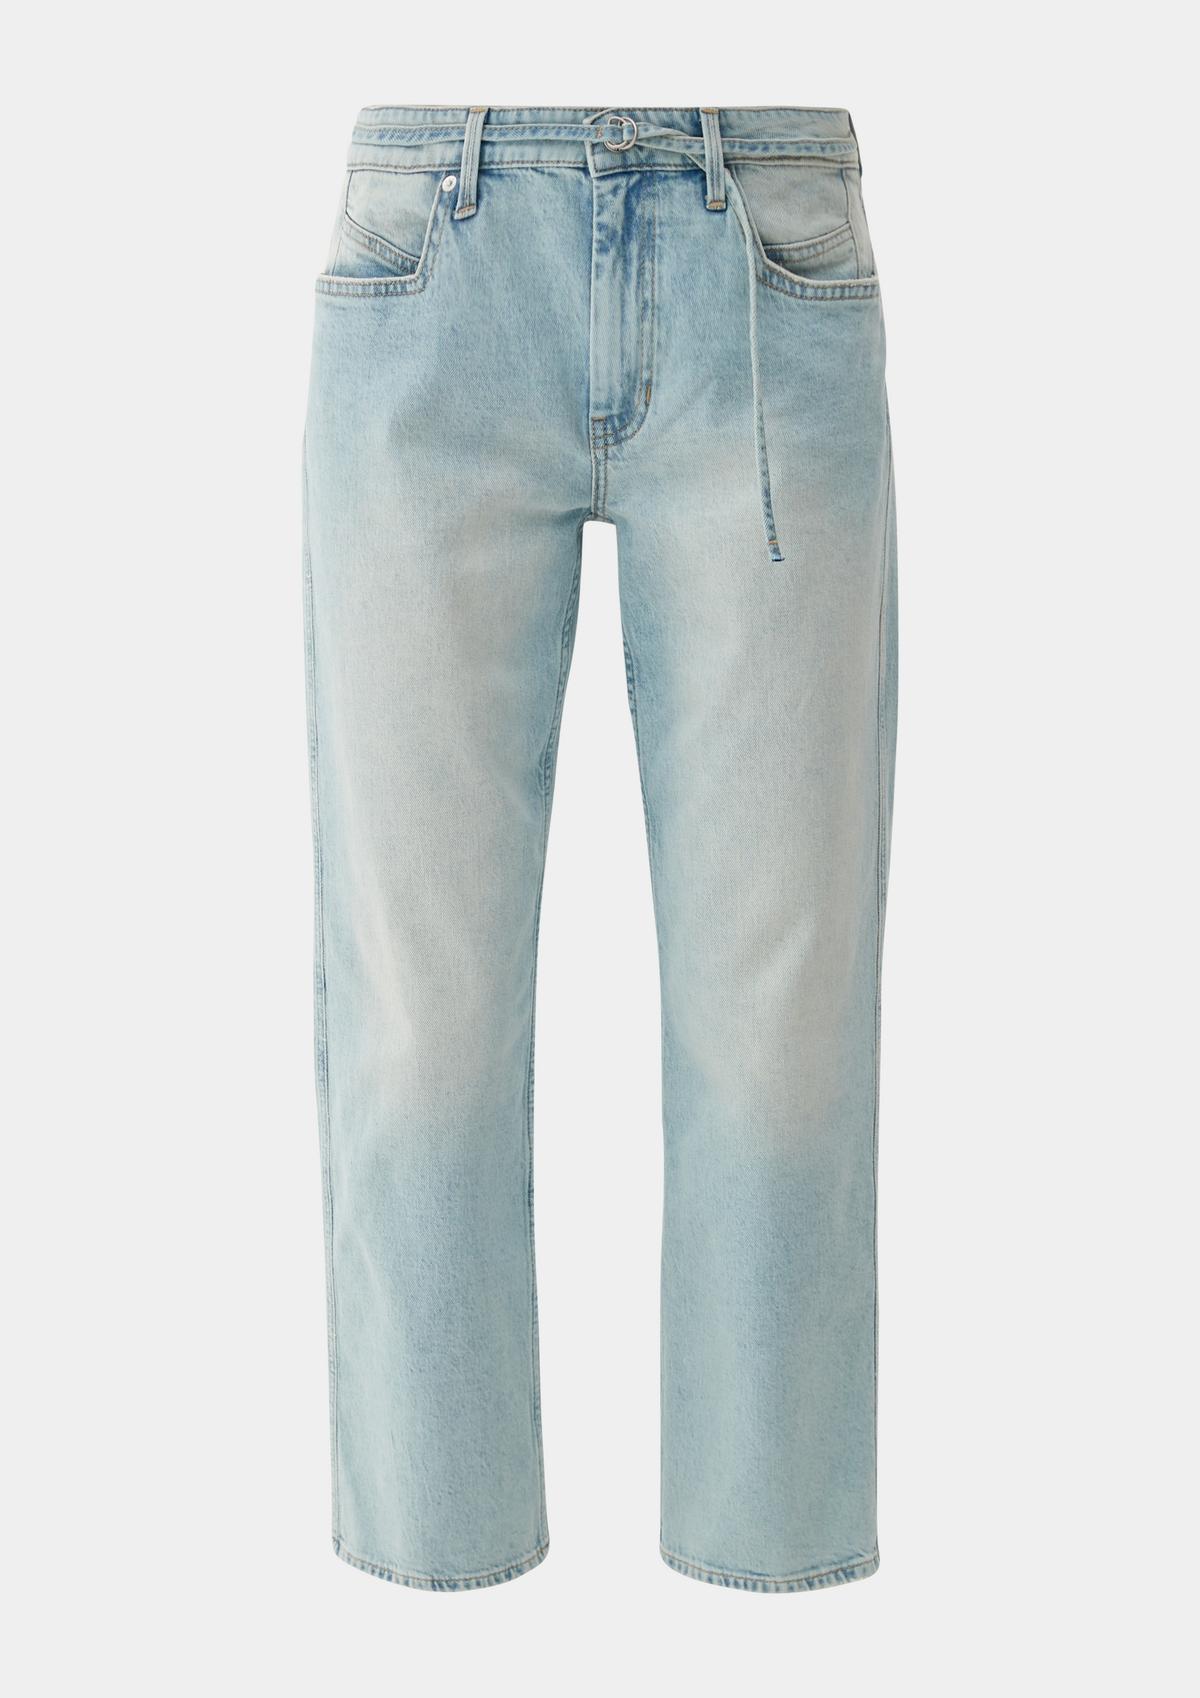 s.Oliver Karolin: džíny s 5 kapsami a rovnými nohavicemi